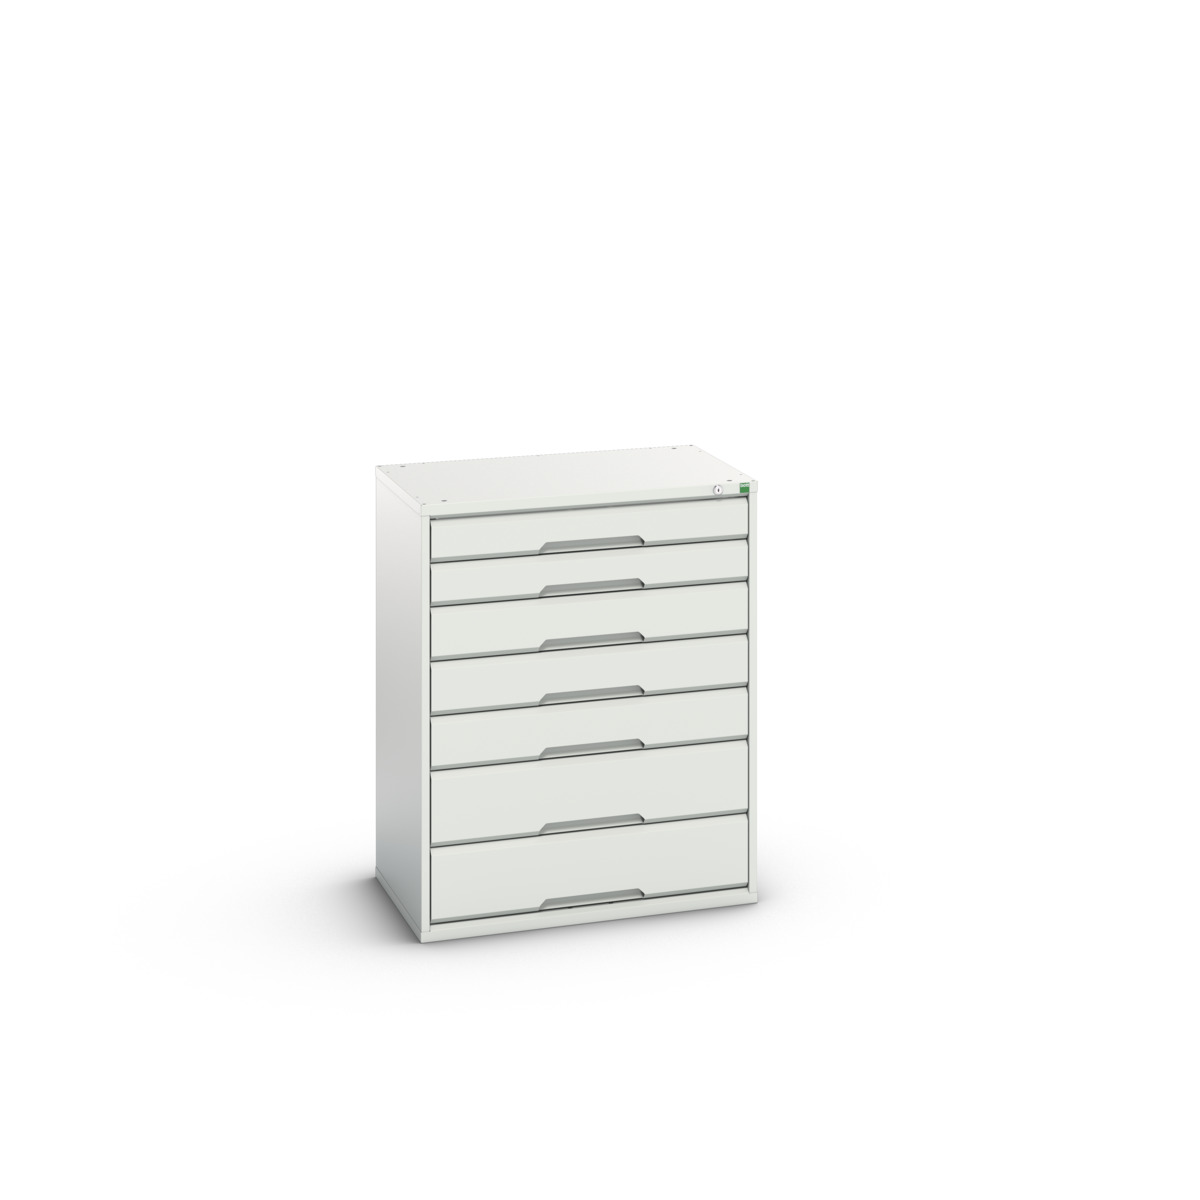 16925149.16 - verso drawer cabinet